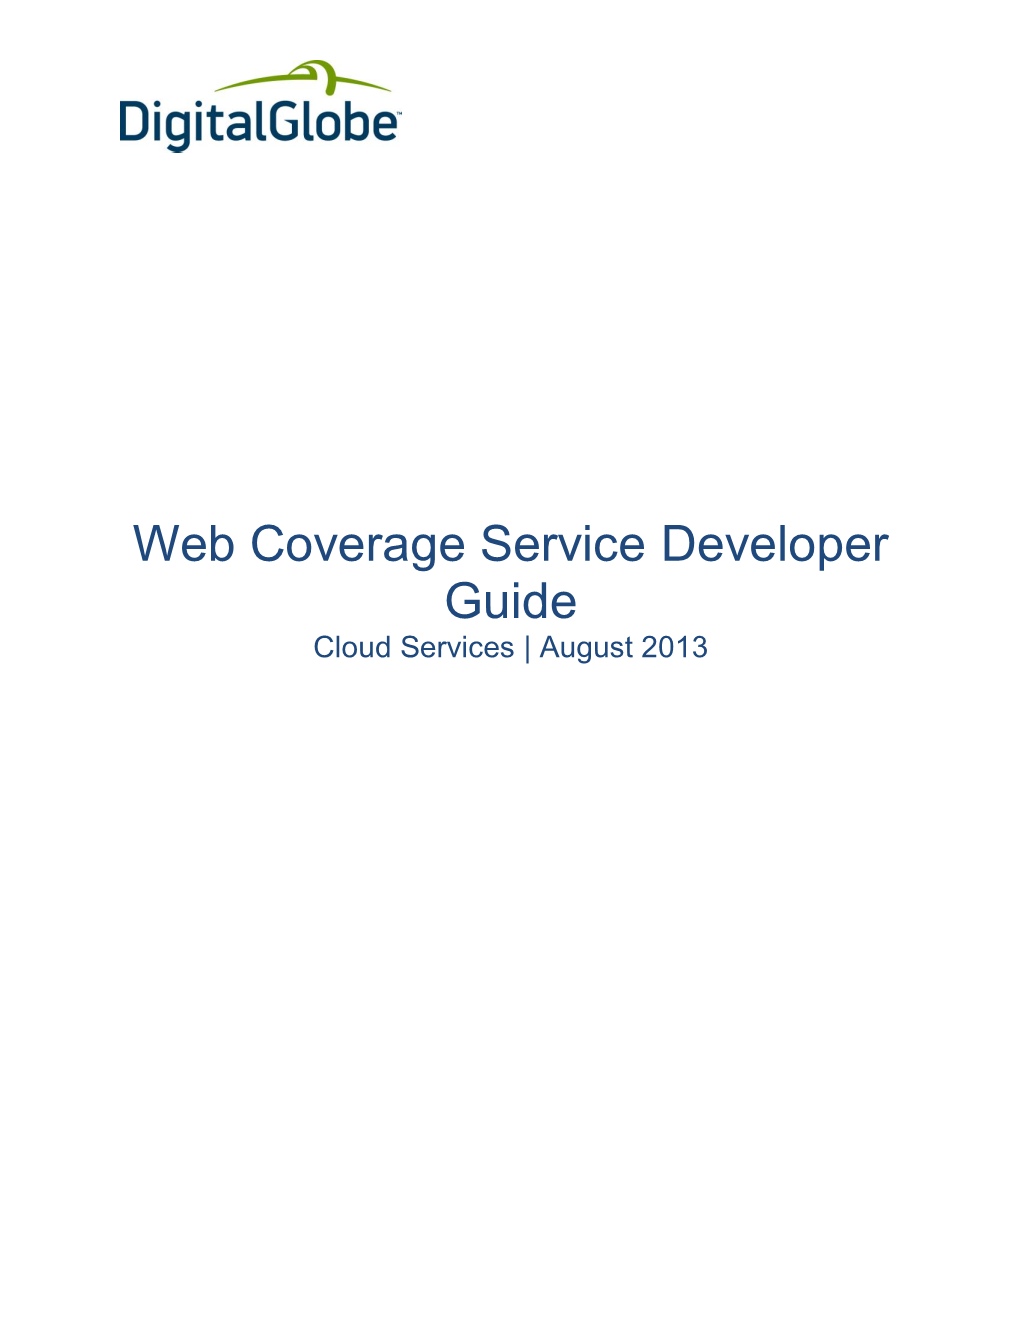 Web Coverage Service Developer Guide Cloud Services | August 2013